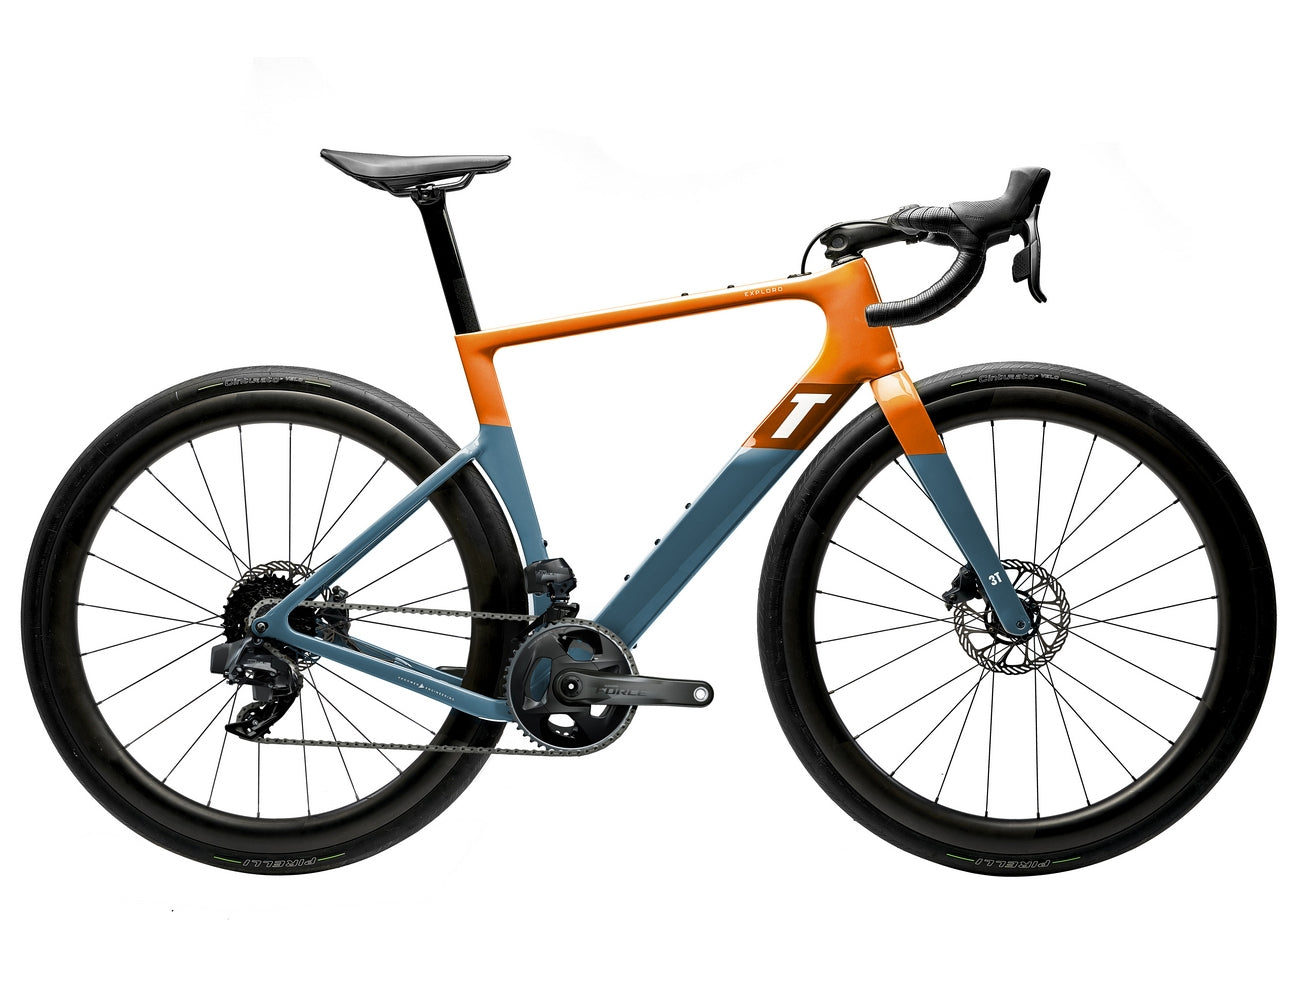 NEW 2021/22 3T Exploro Race Force AXS 2X Carbon Gravel Bike